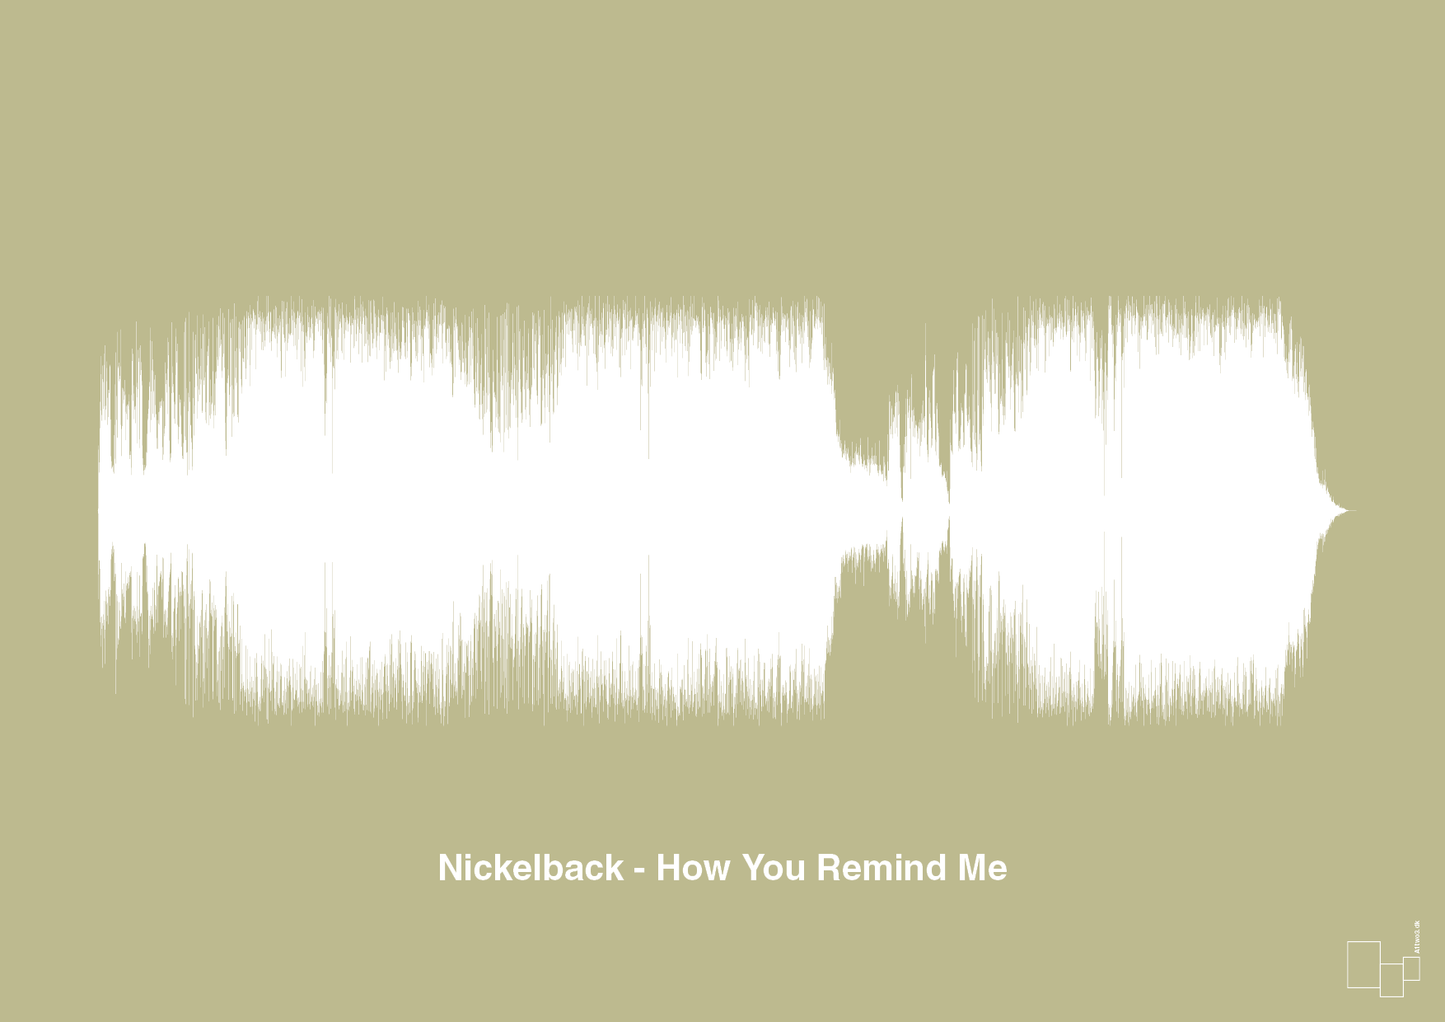 nickelback - how you remind me - Plakat med Musik i Back to Nature